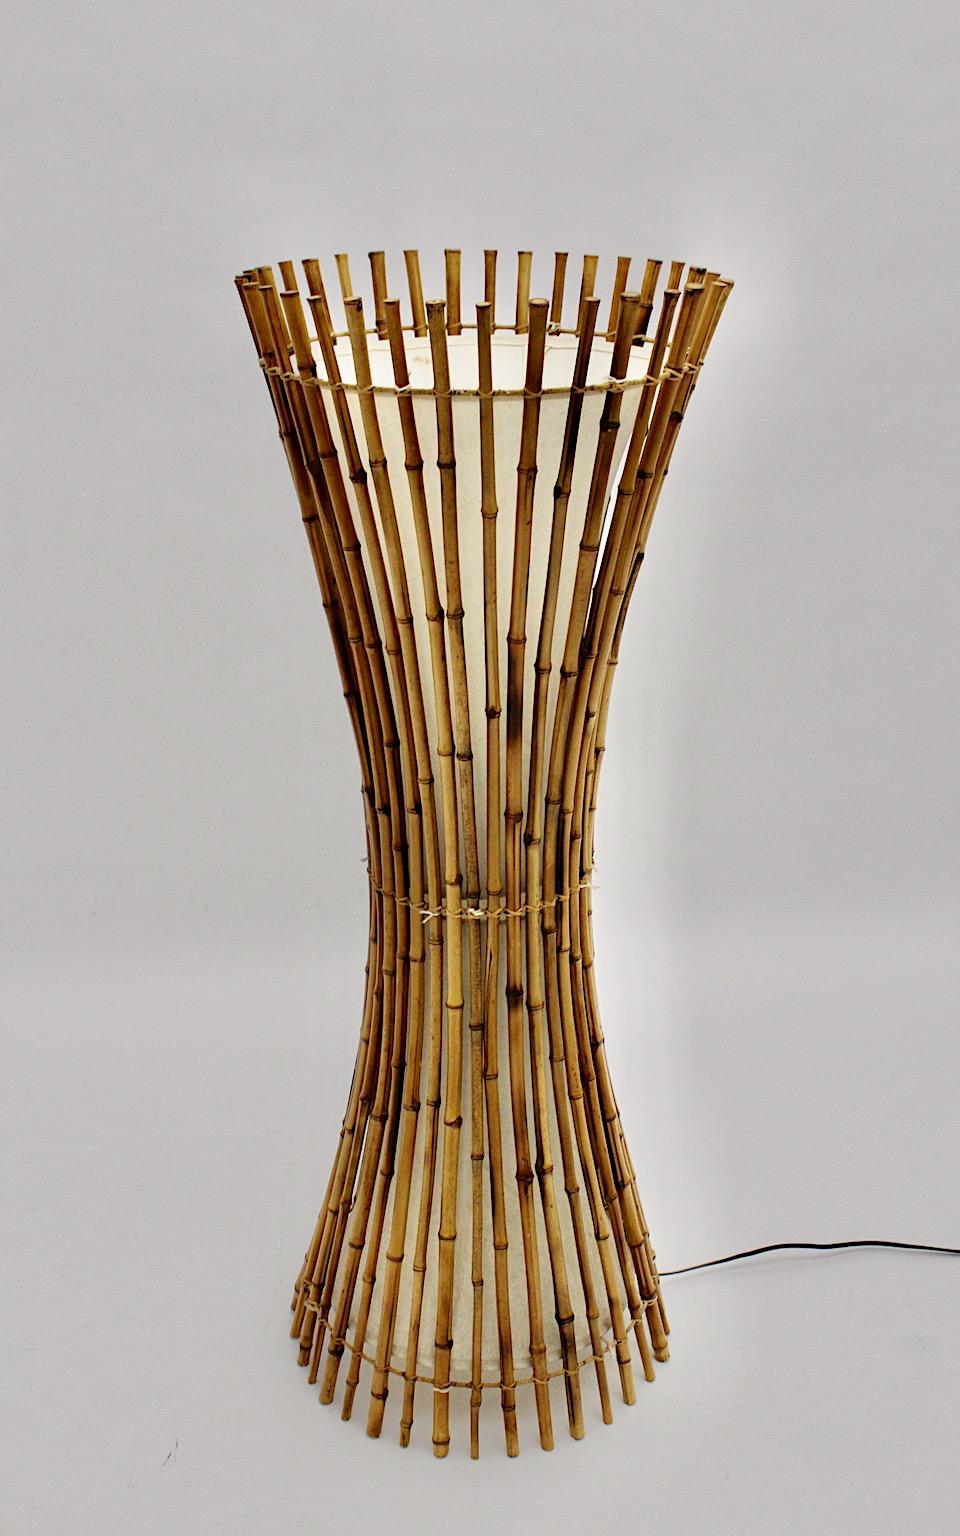 Italian Mid-Century Modern Vintage Sheaf of Bamboo Rattan Organic Floor Lamp 1970s Italy For Sale